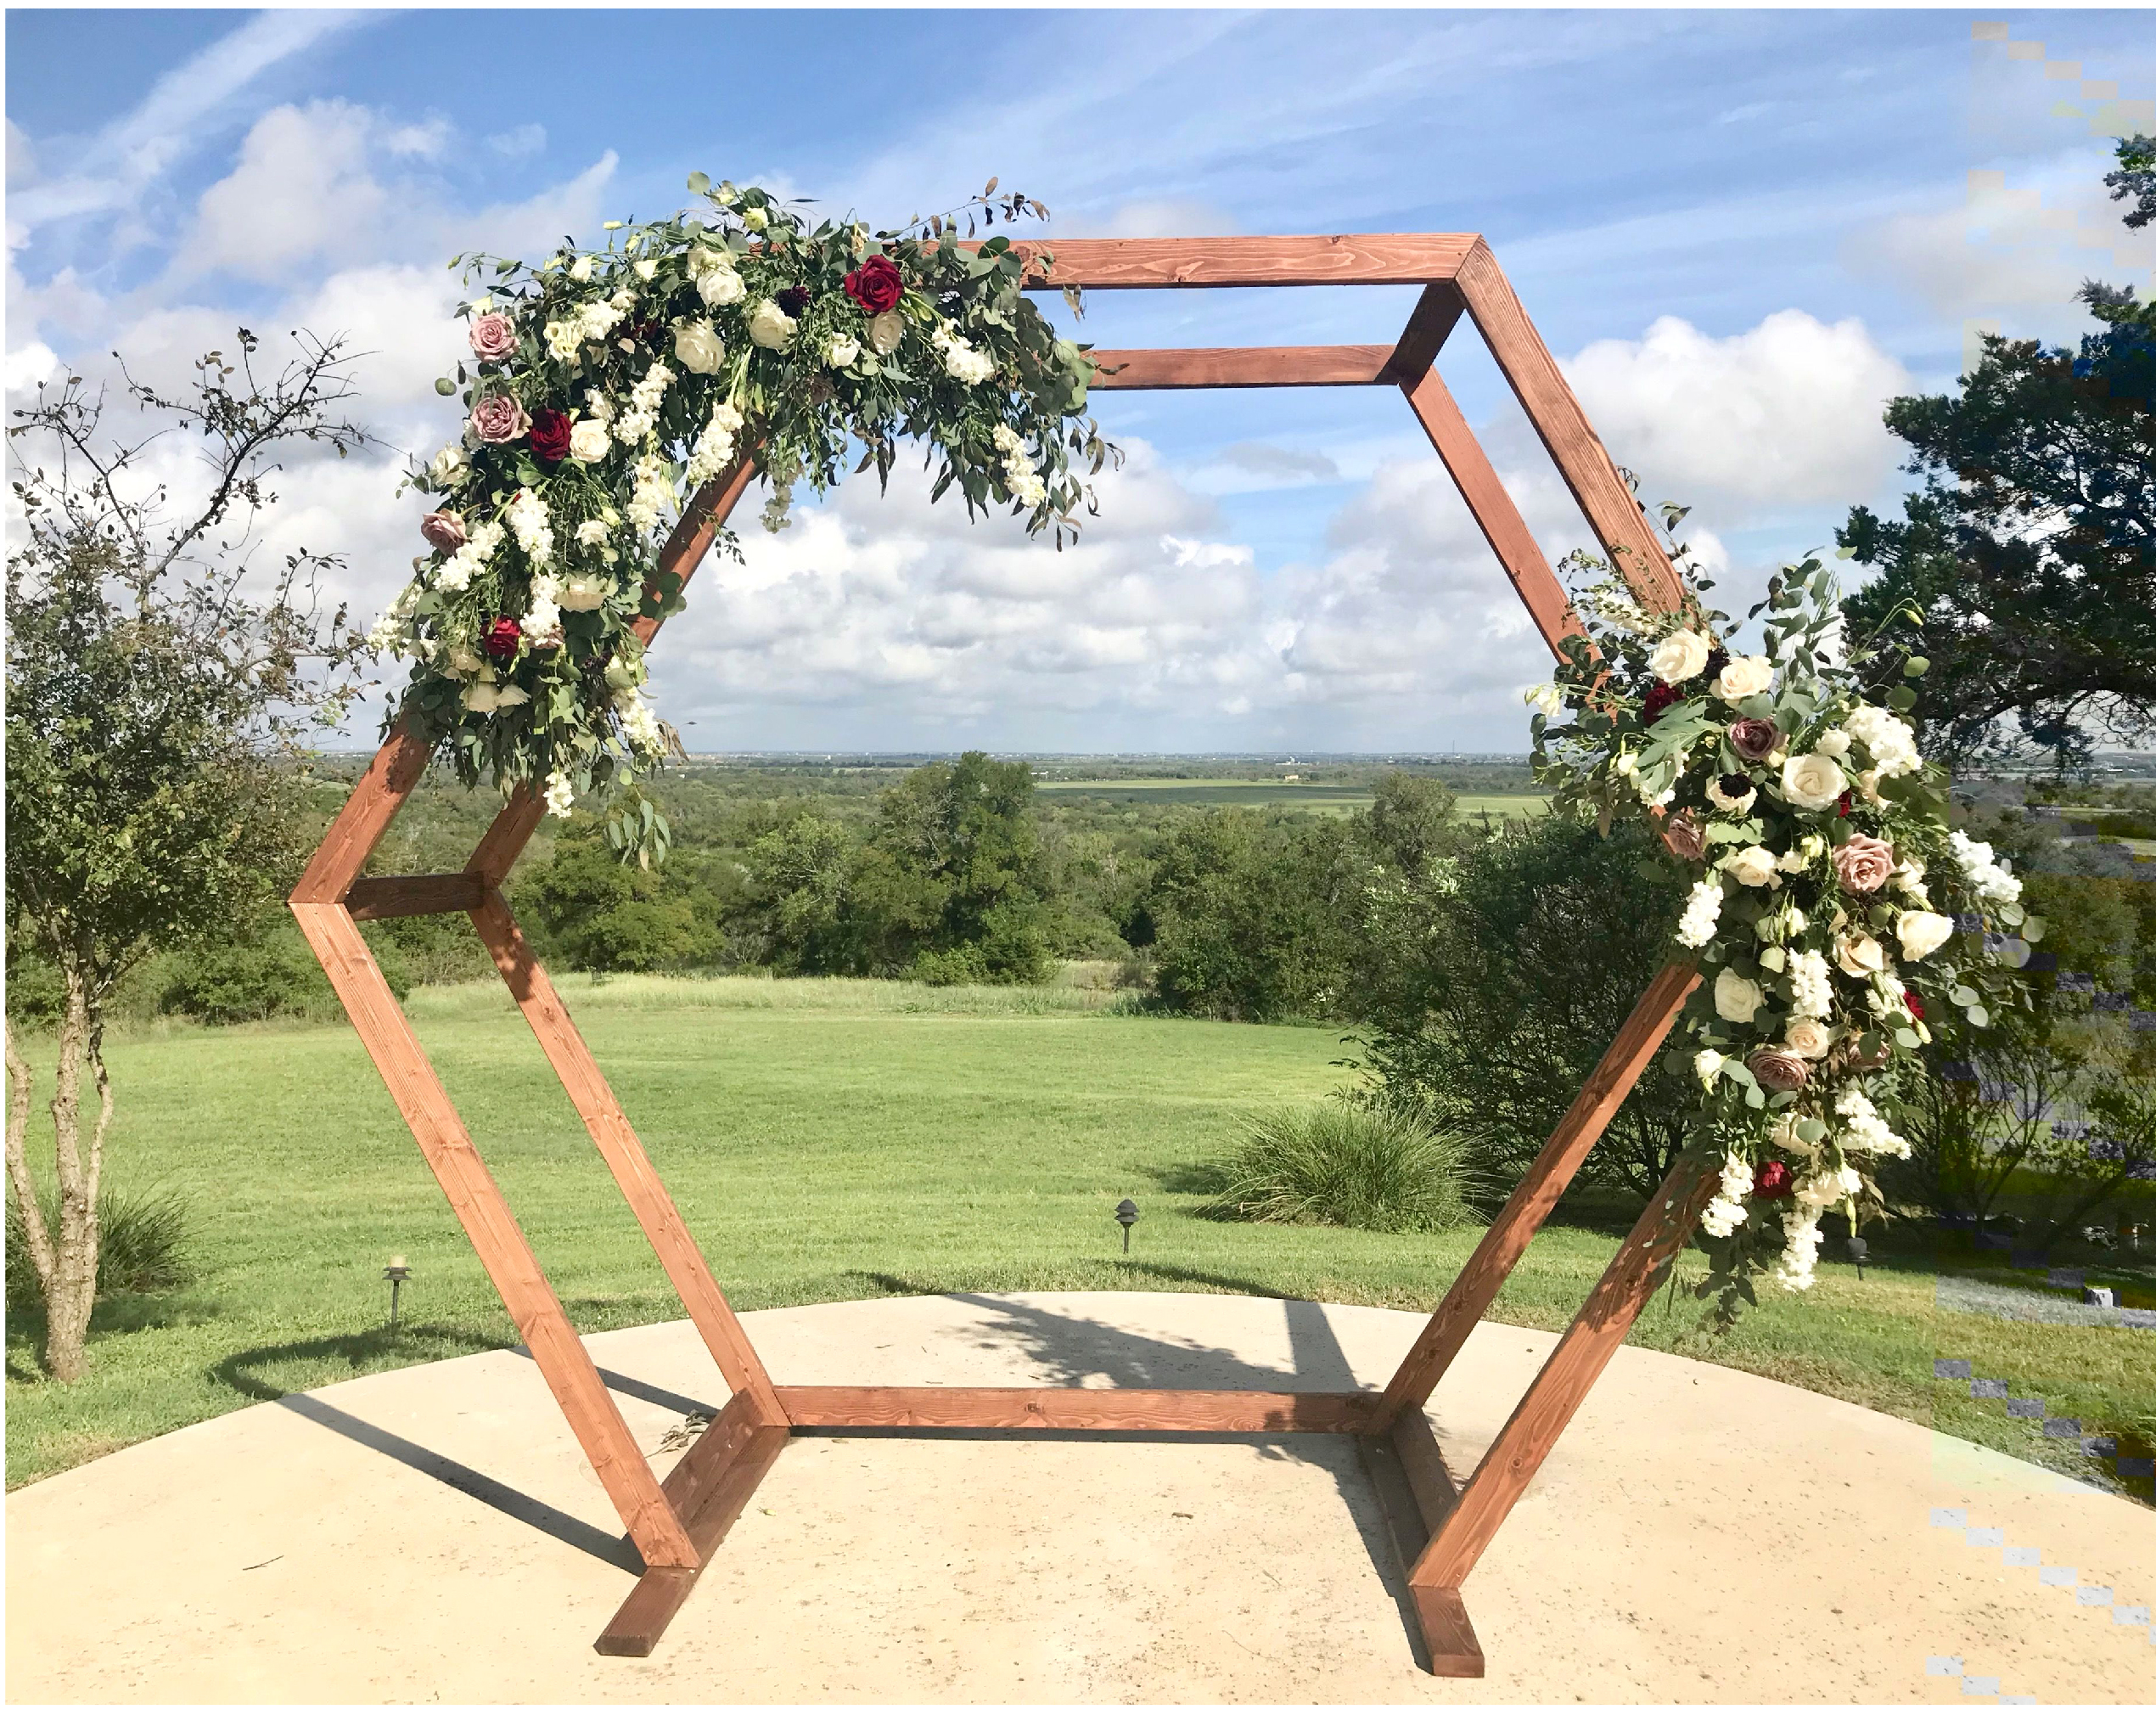 5 Easy DIY Wedding Arbors For Backyard Ceremonies - Build Blueprint